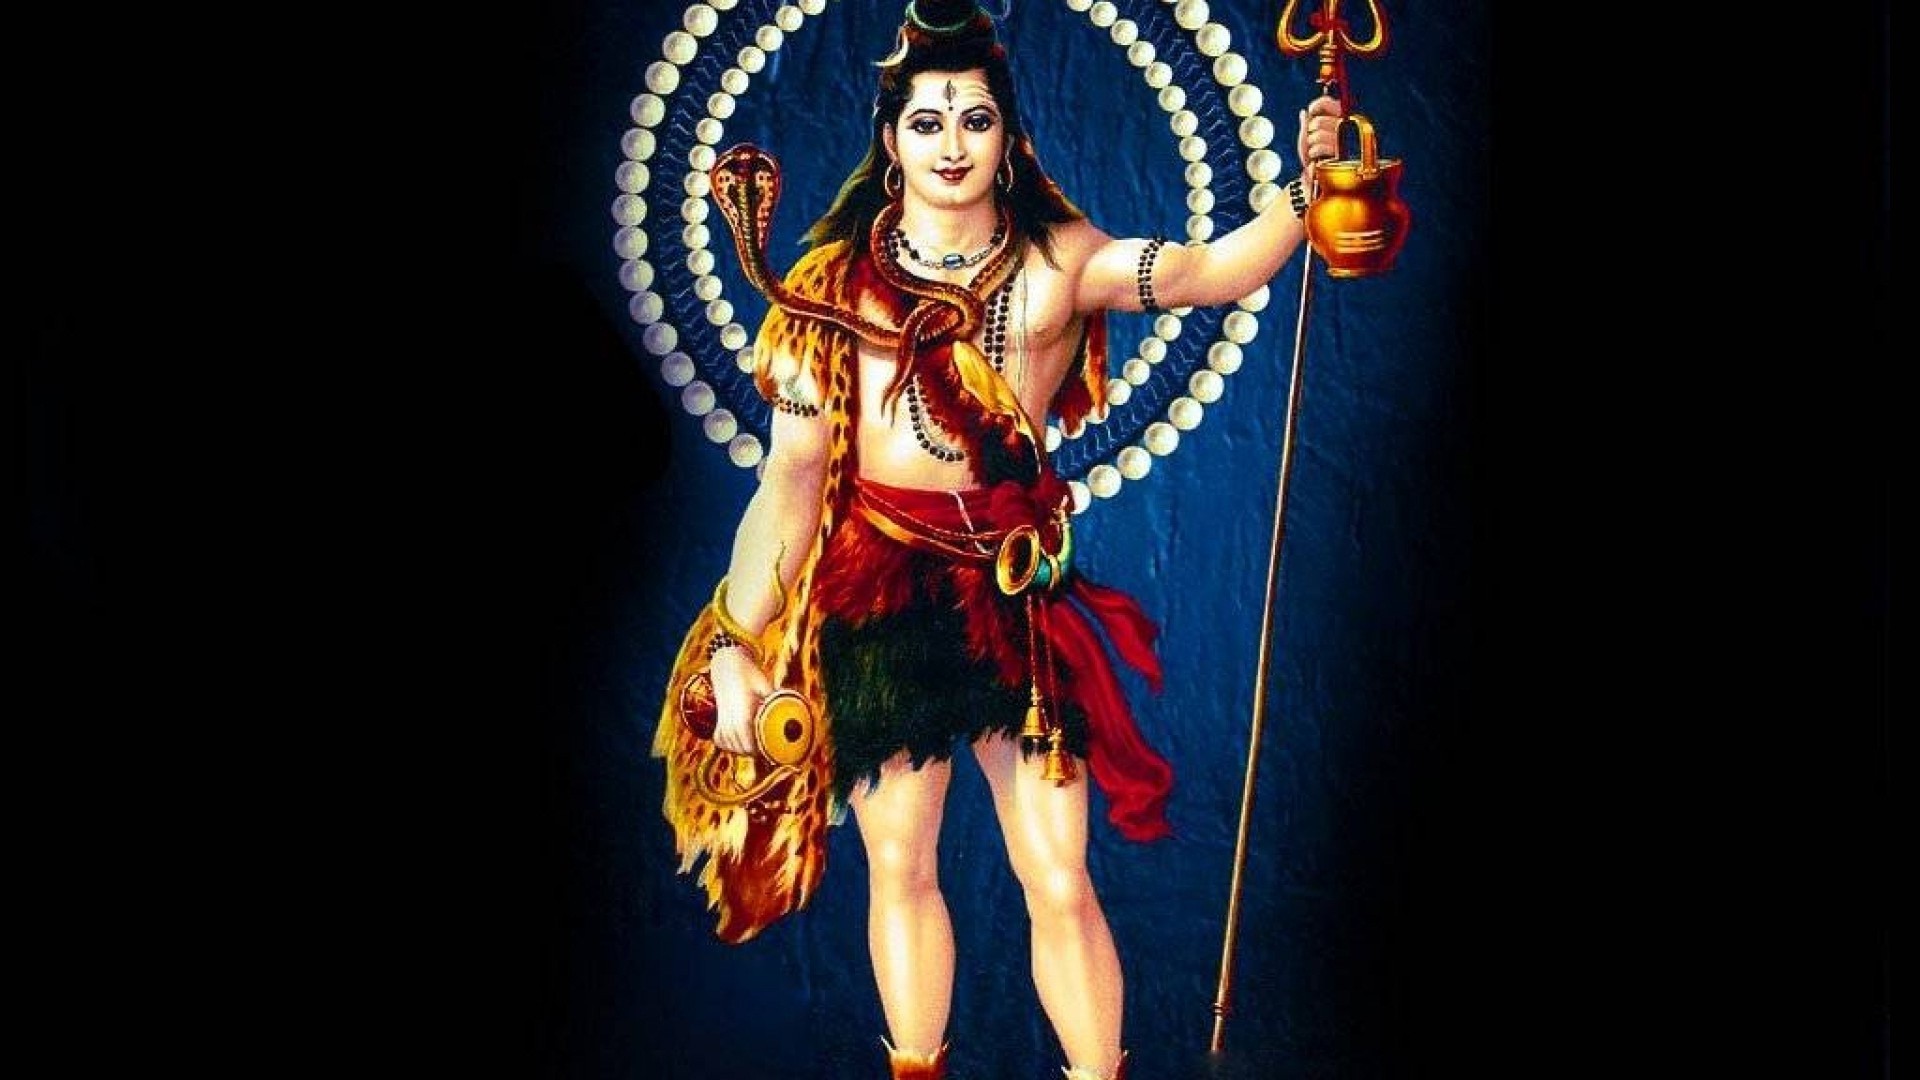 Happy Maha Shivaratri Lord Shiva Pictures. HD Lord Shiva Wallpapers